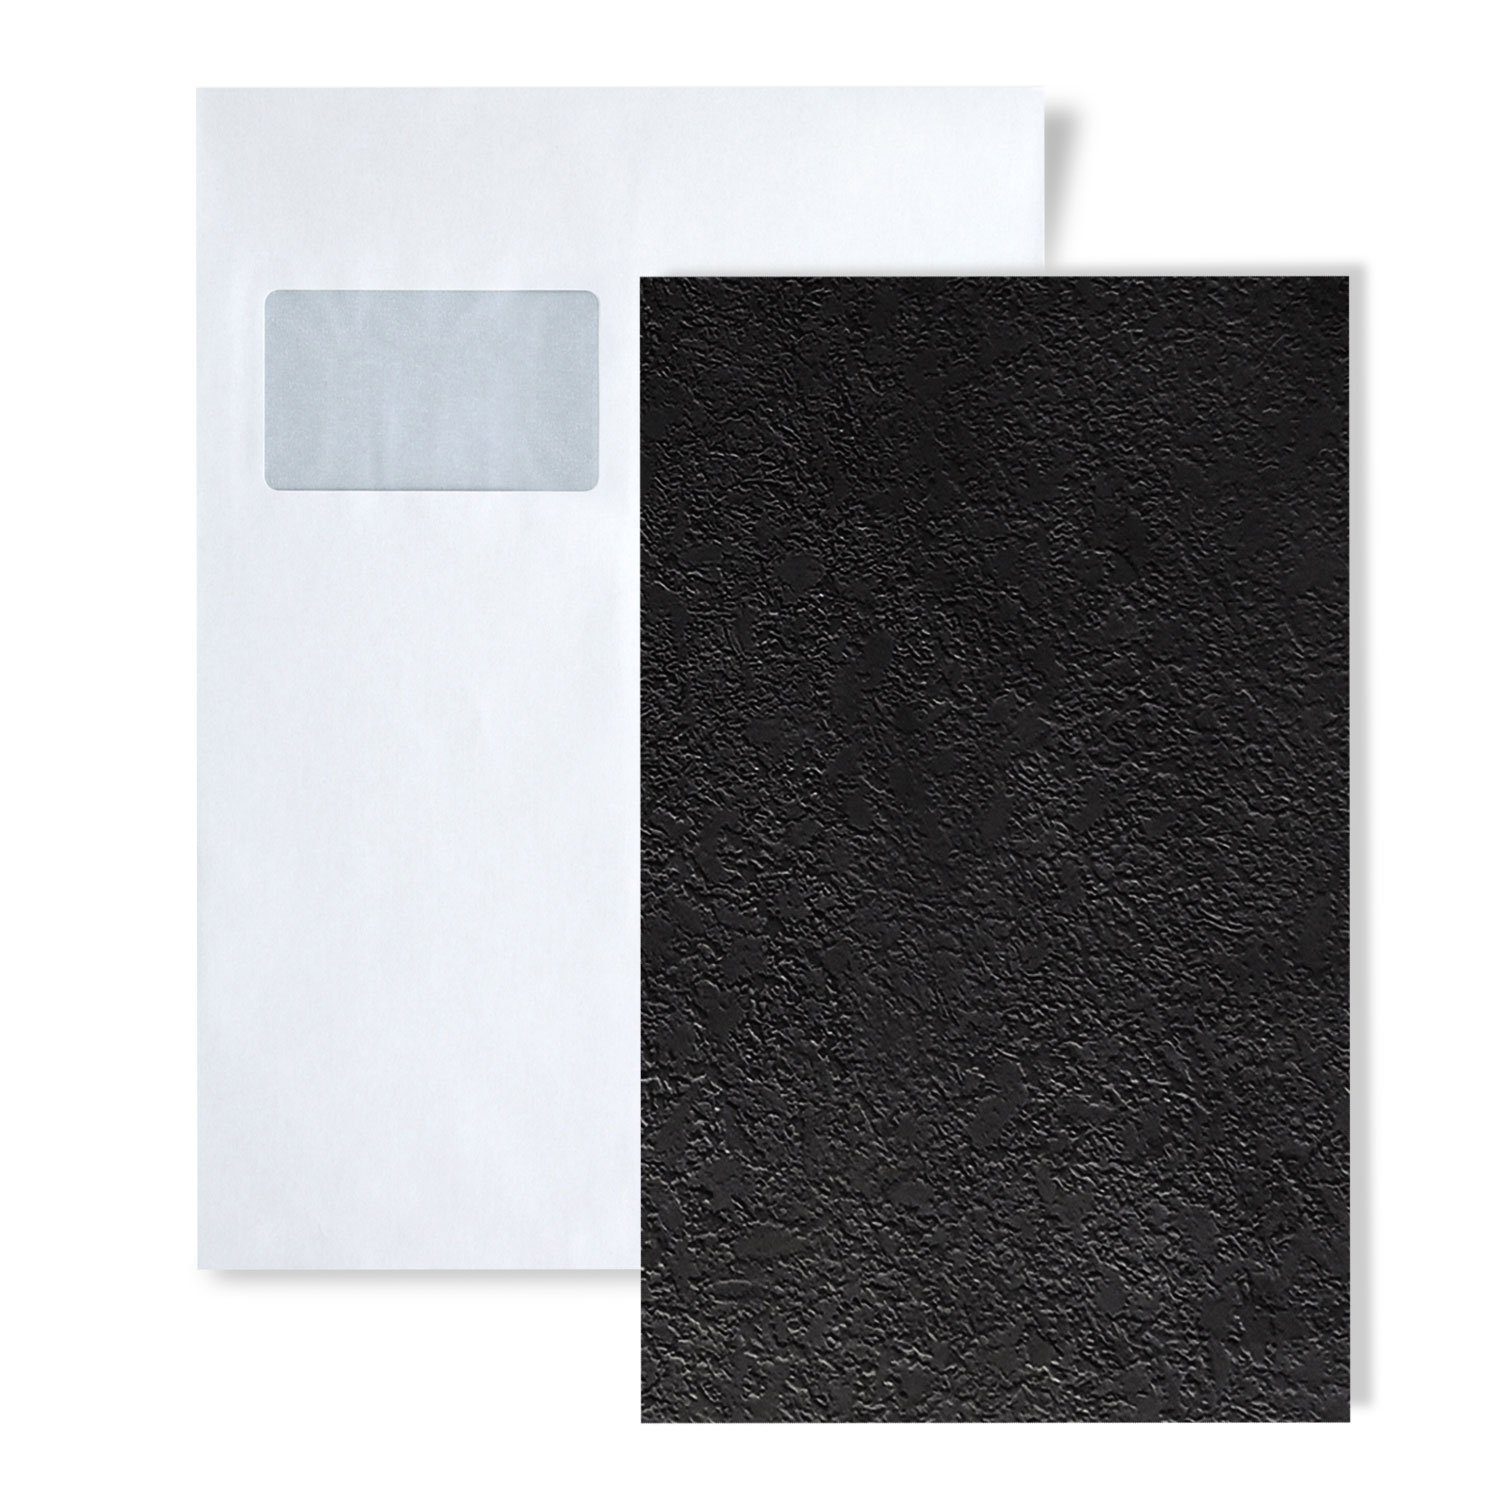 Wallface Dekorpaneele S-22737-NA, BxL: 15x20 cm, (1 MUSTERSTÜCK, Produktmuster, 1-tlg., Muster des Dekorpaneels) schwarz